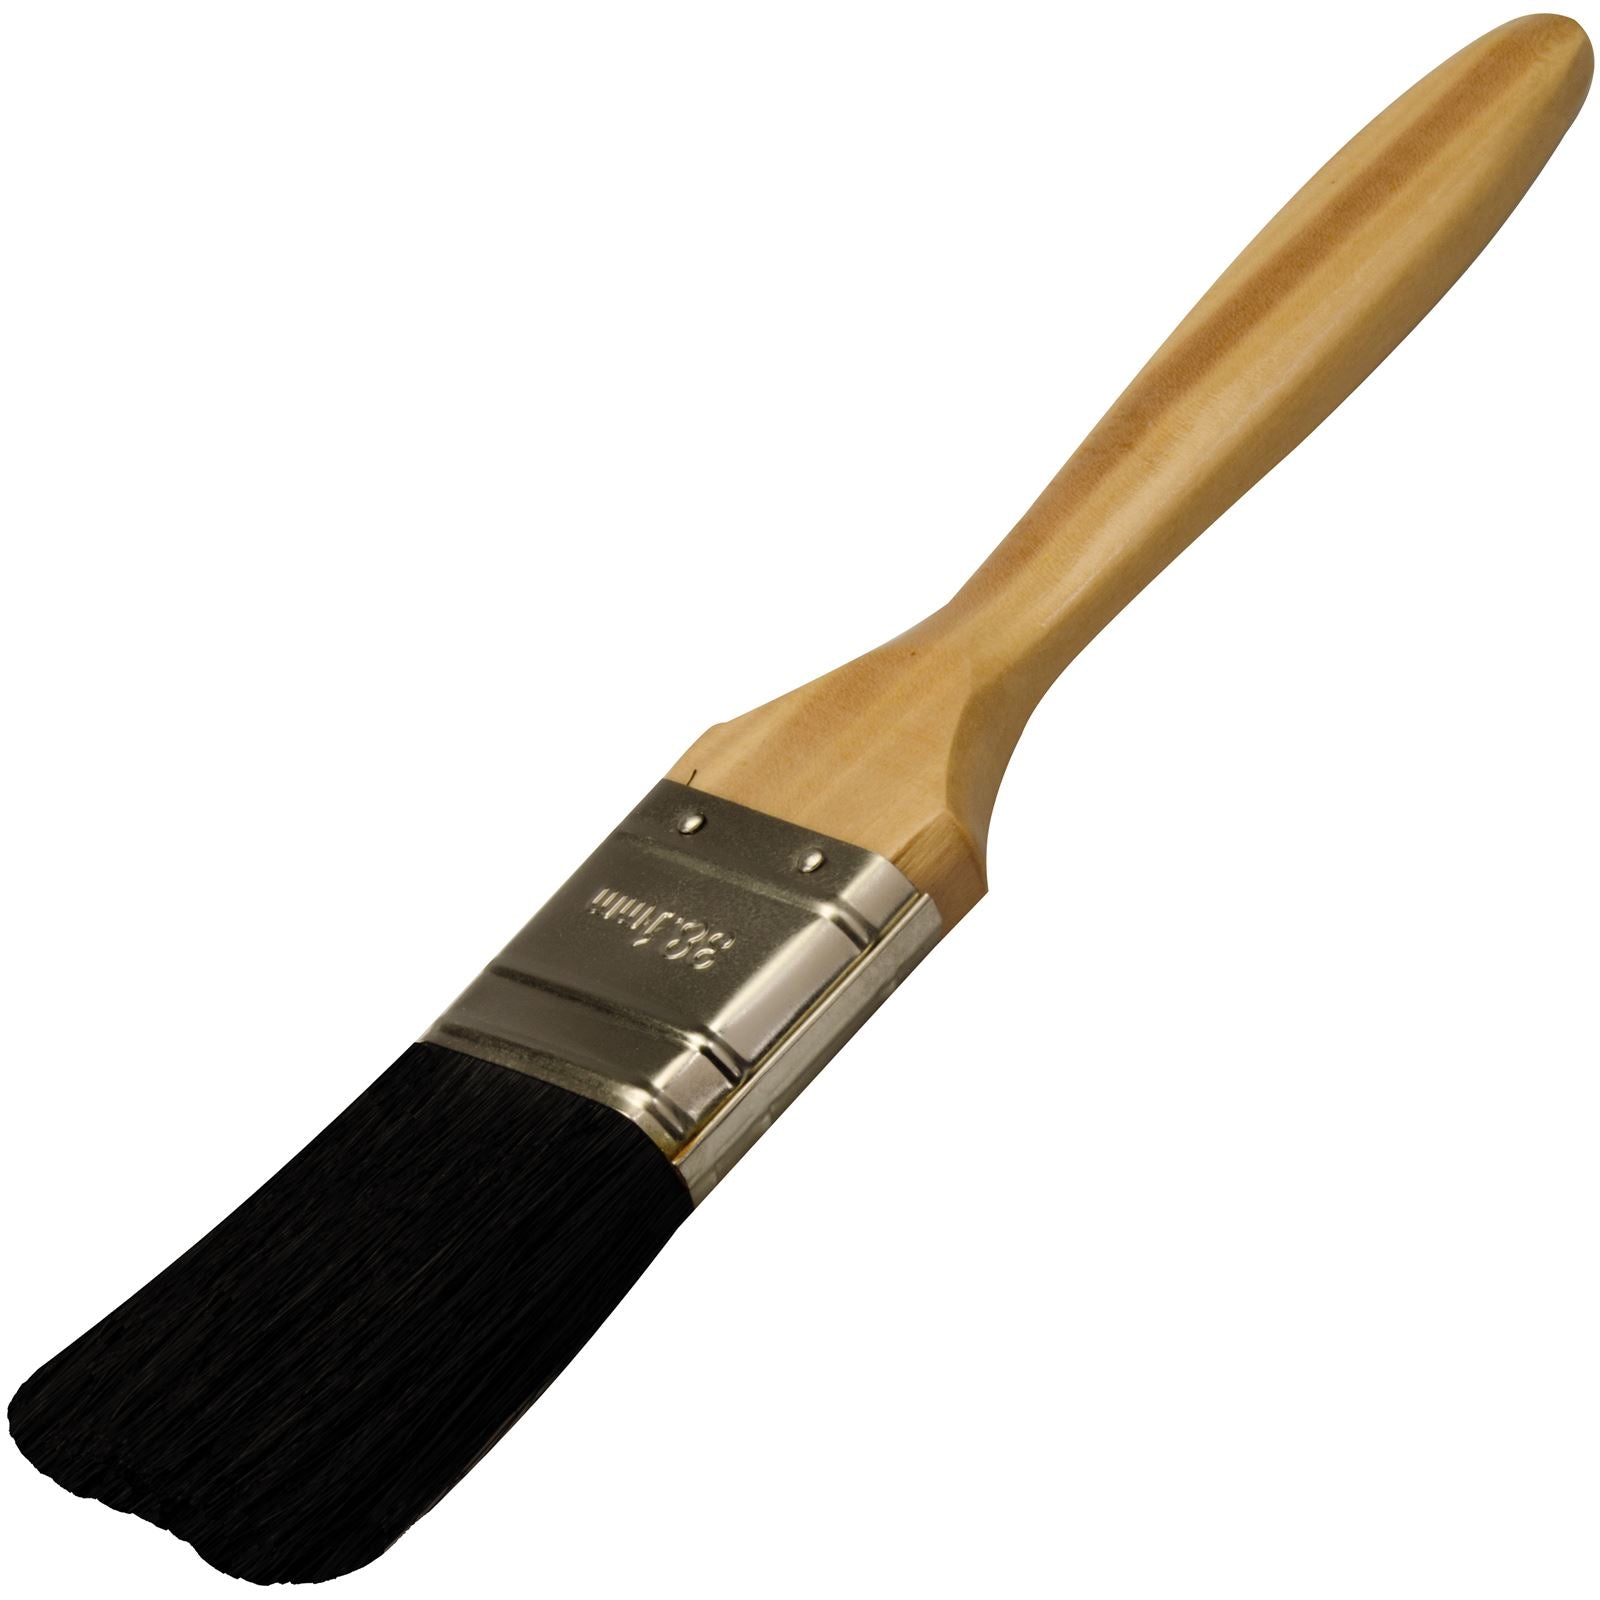 Silverline Premium Paint Brushes 12-100mm